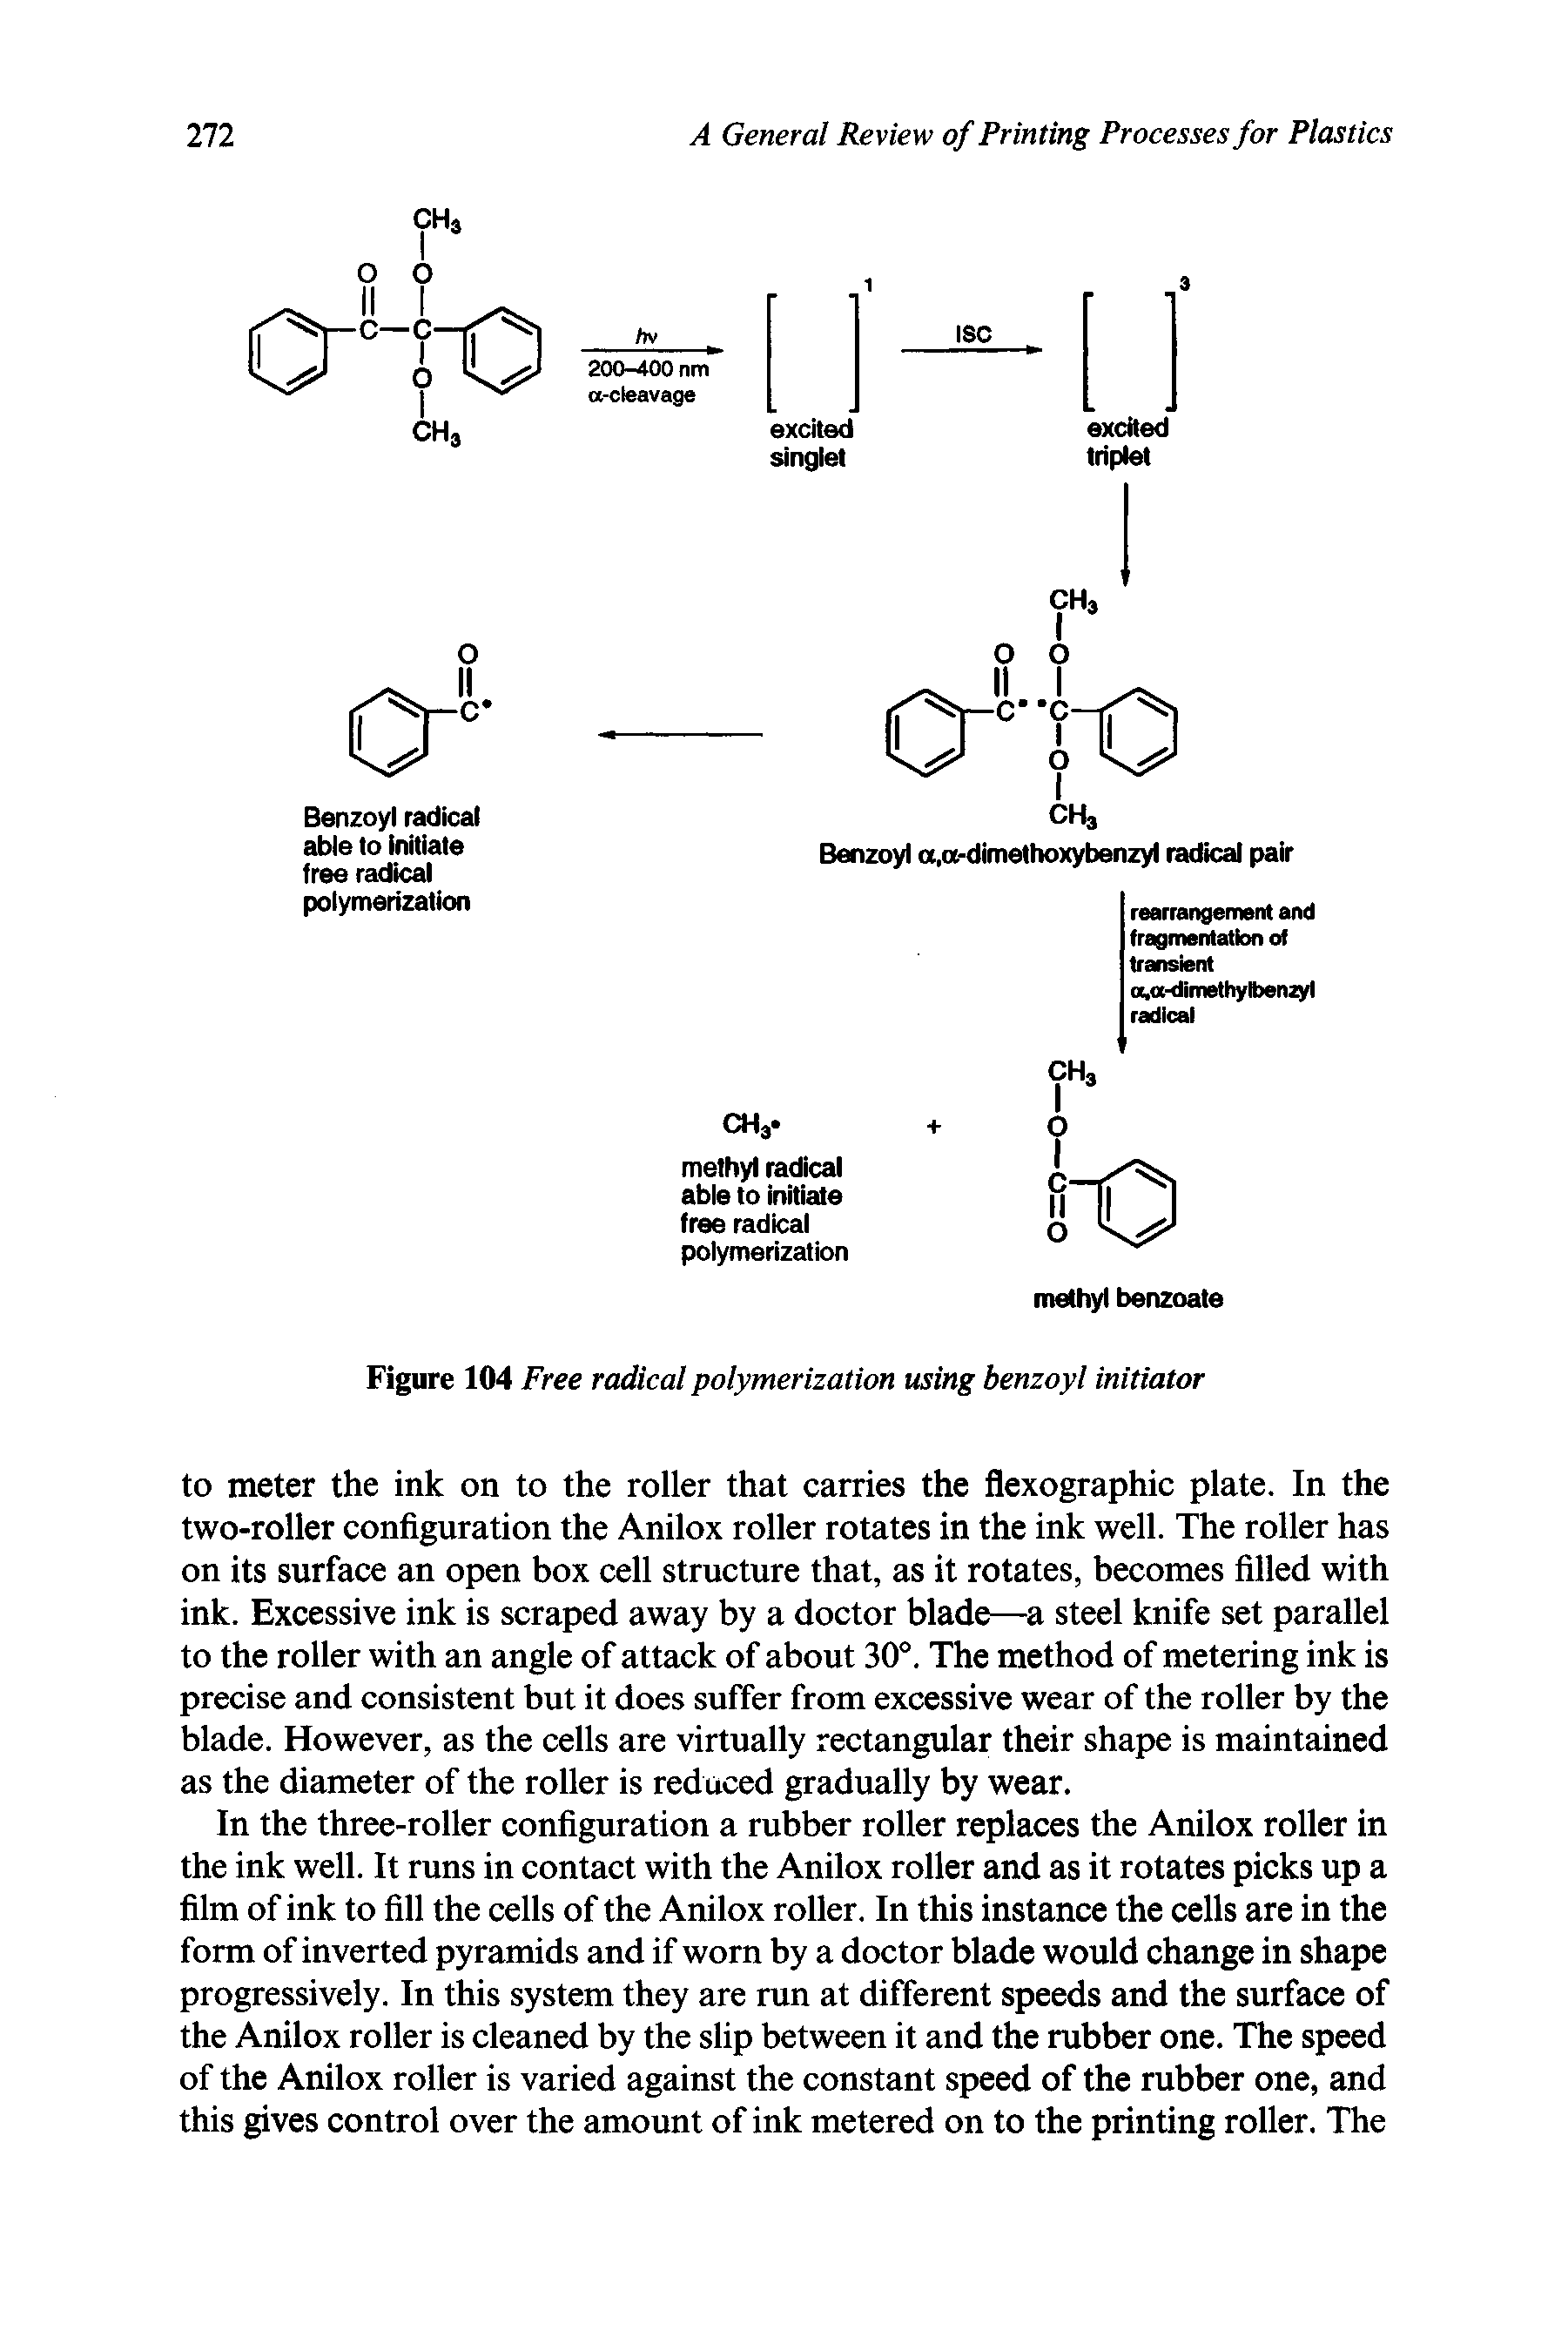 Figure 104 Free radical polymerization using benzoyl initiator...